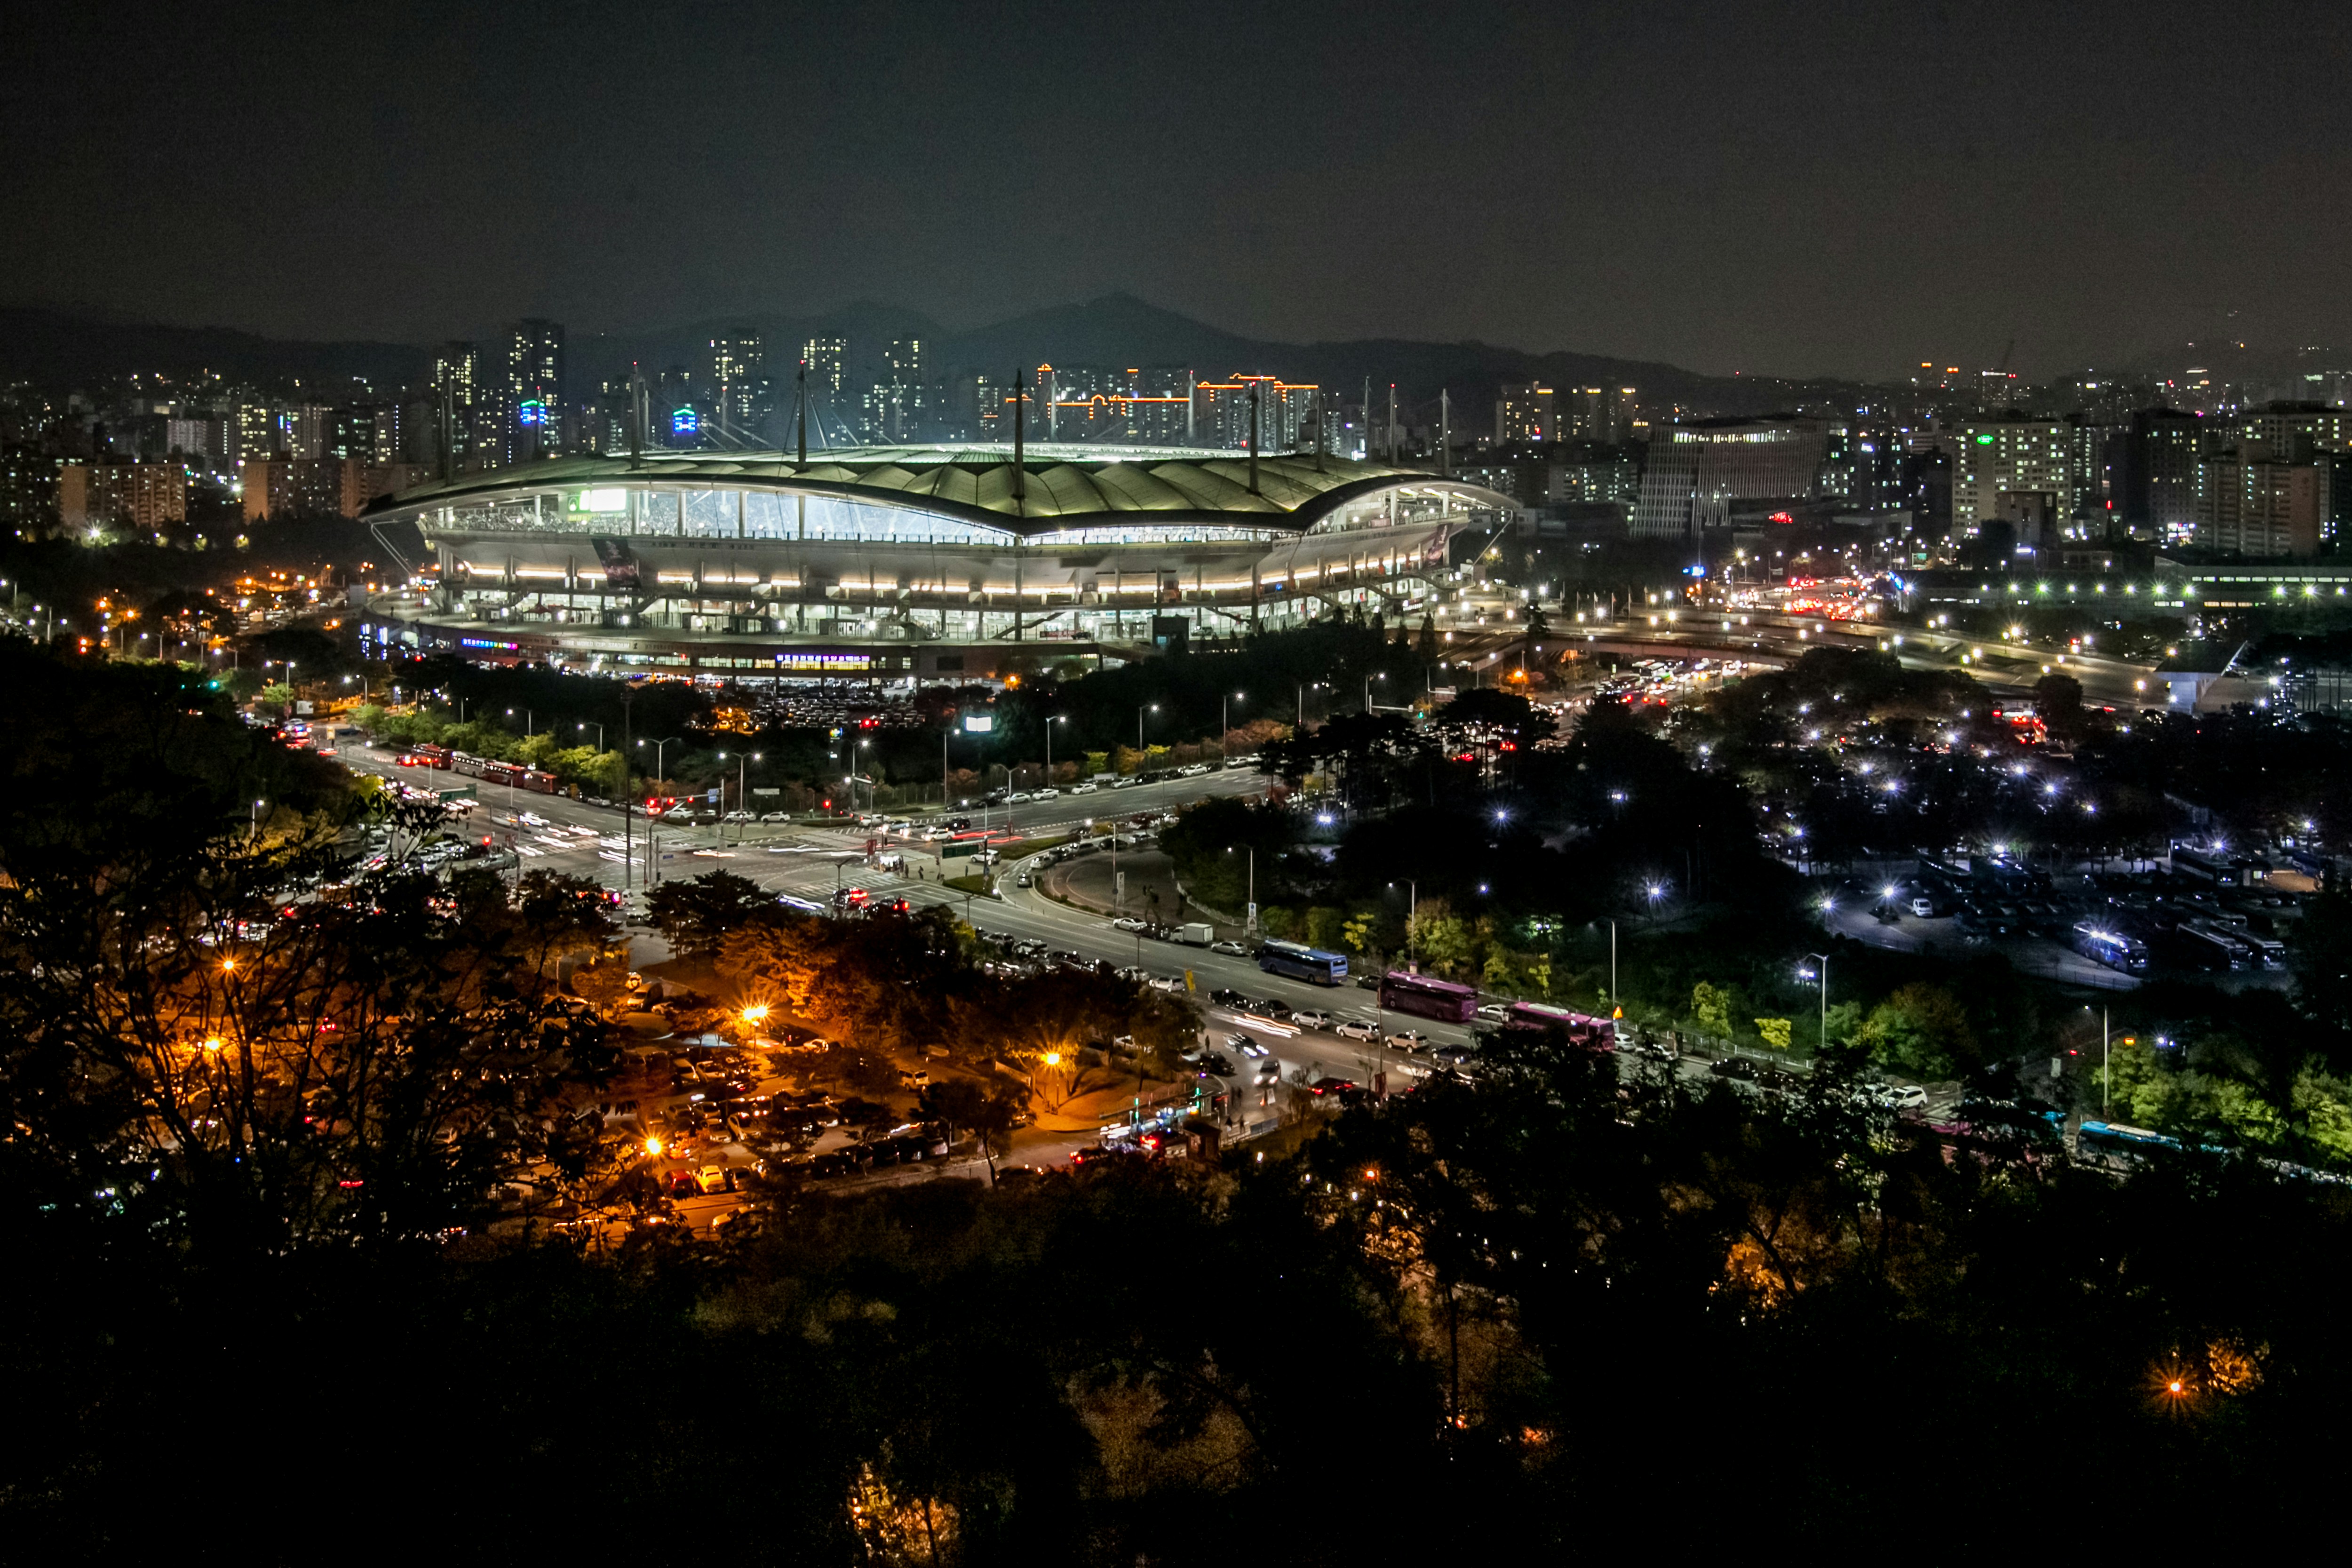 World Cup Stadium @Seoul